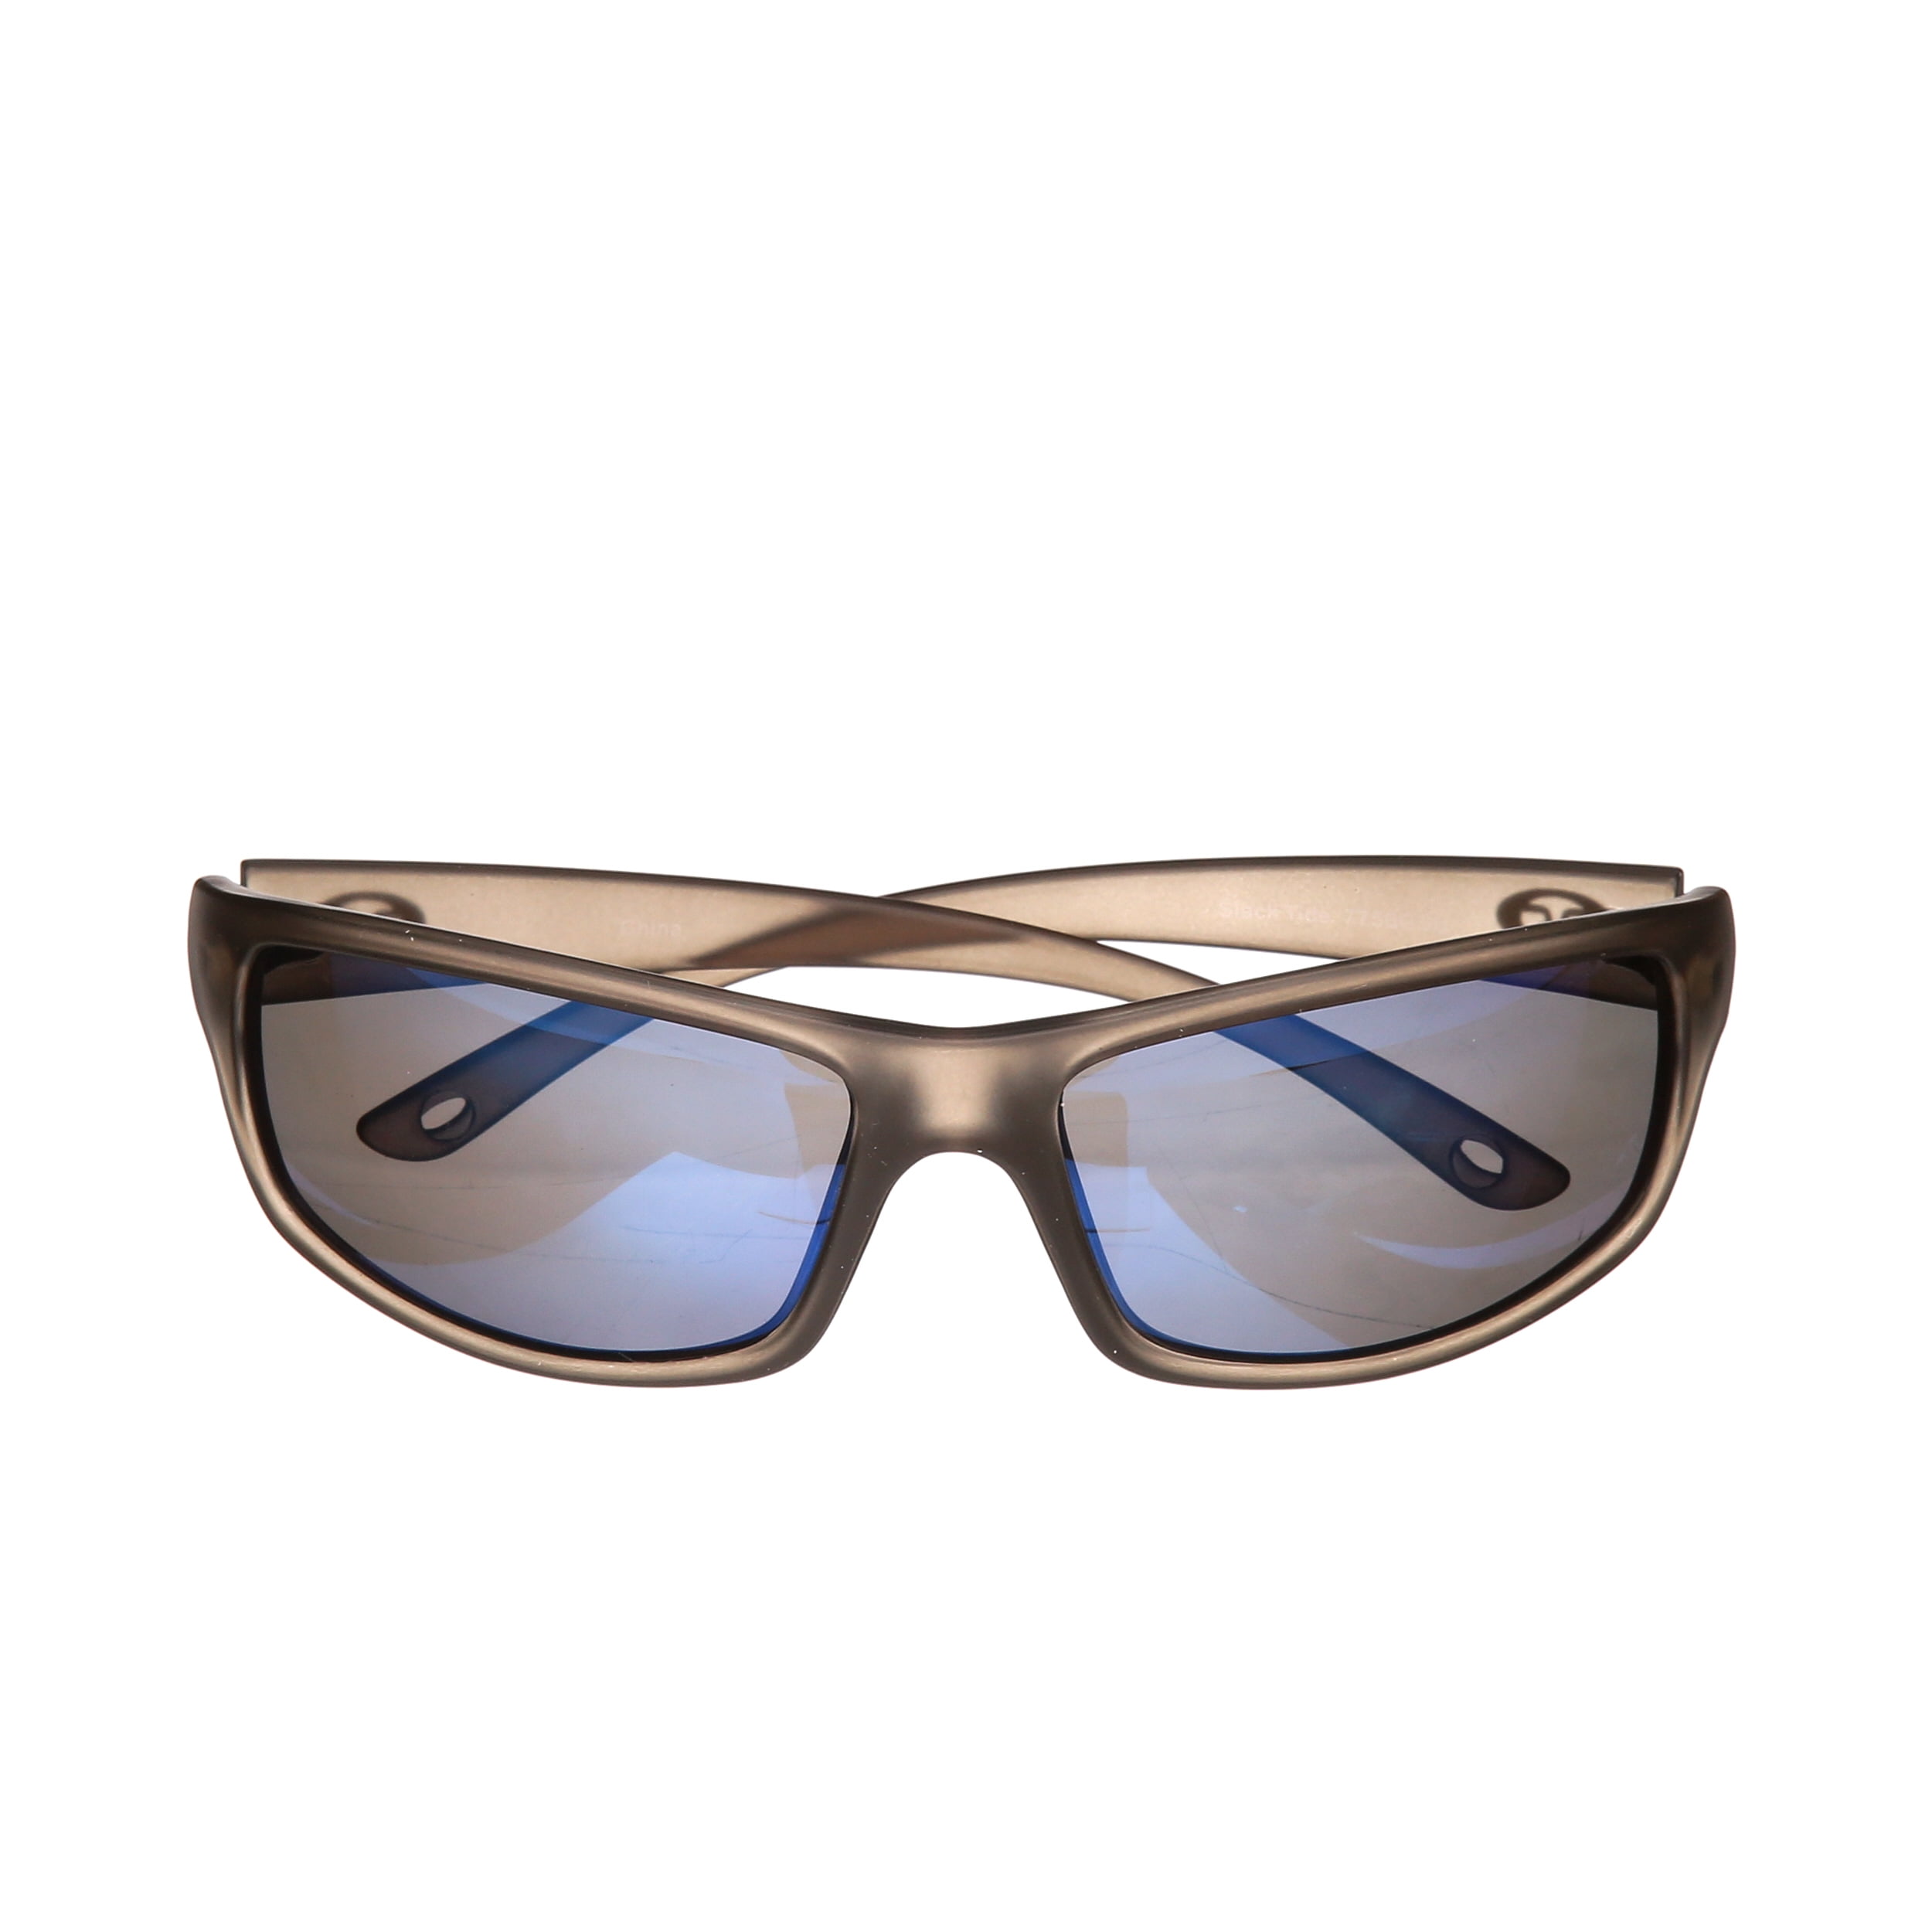 Flying Fisherman Slack Tide Polarized Sunglasses Matte in Black Frame with  Smoke Lens 7756BS - The Home Depot